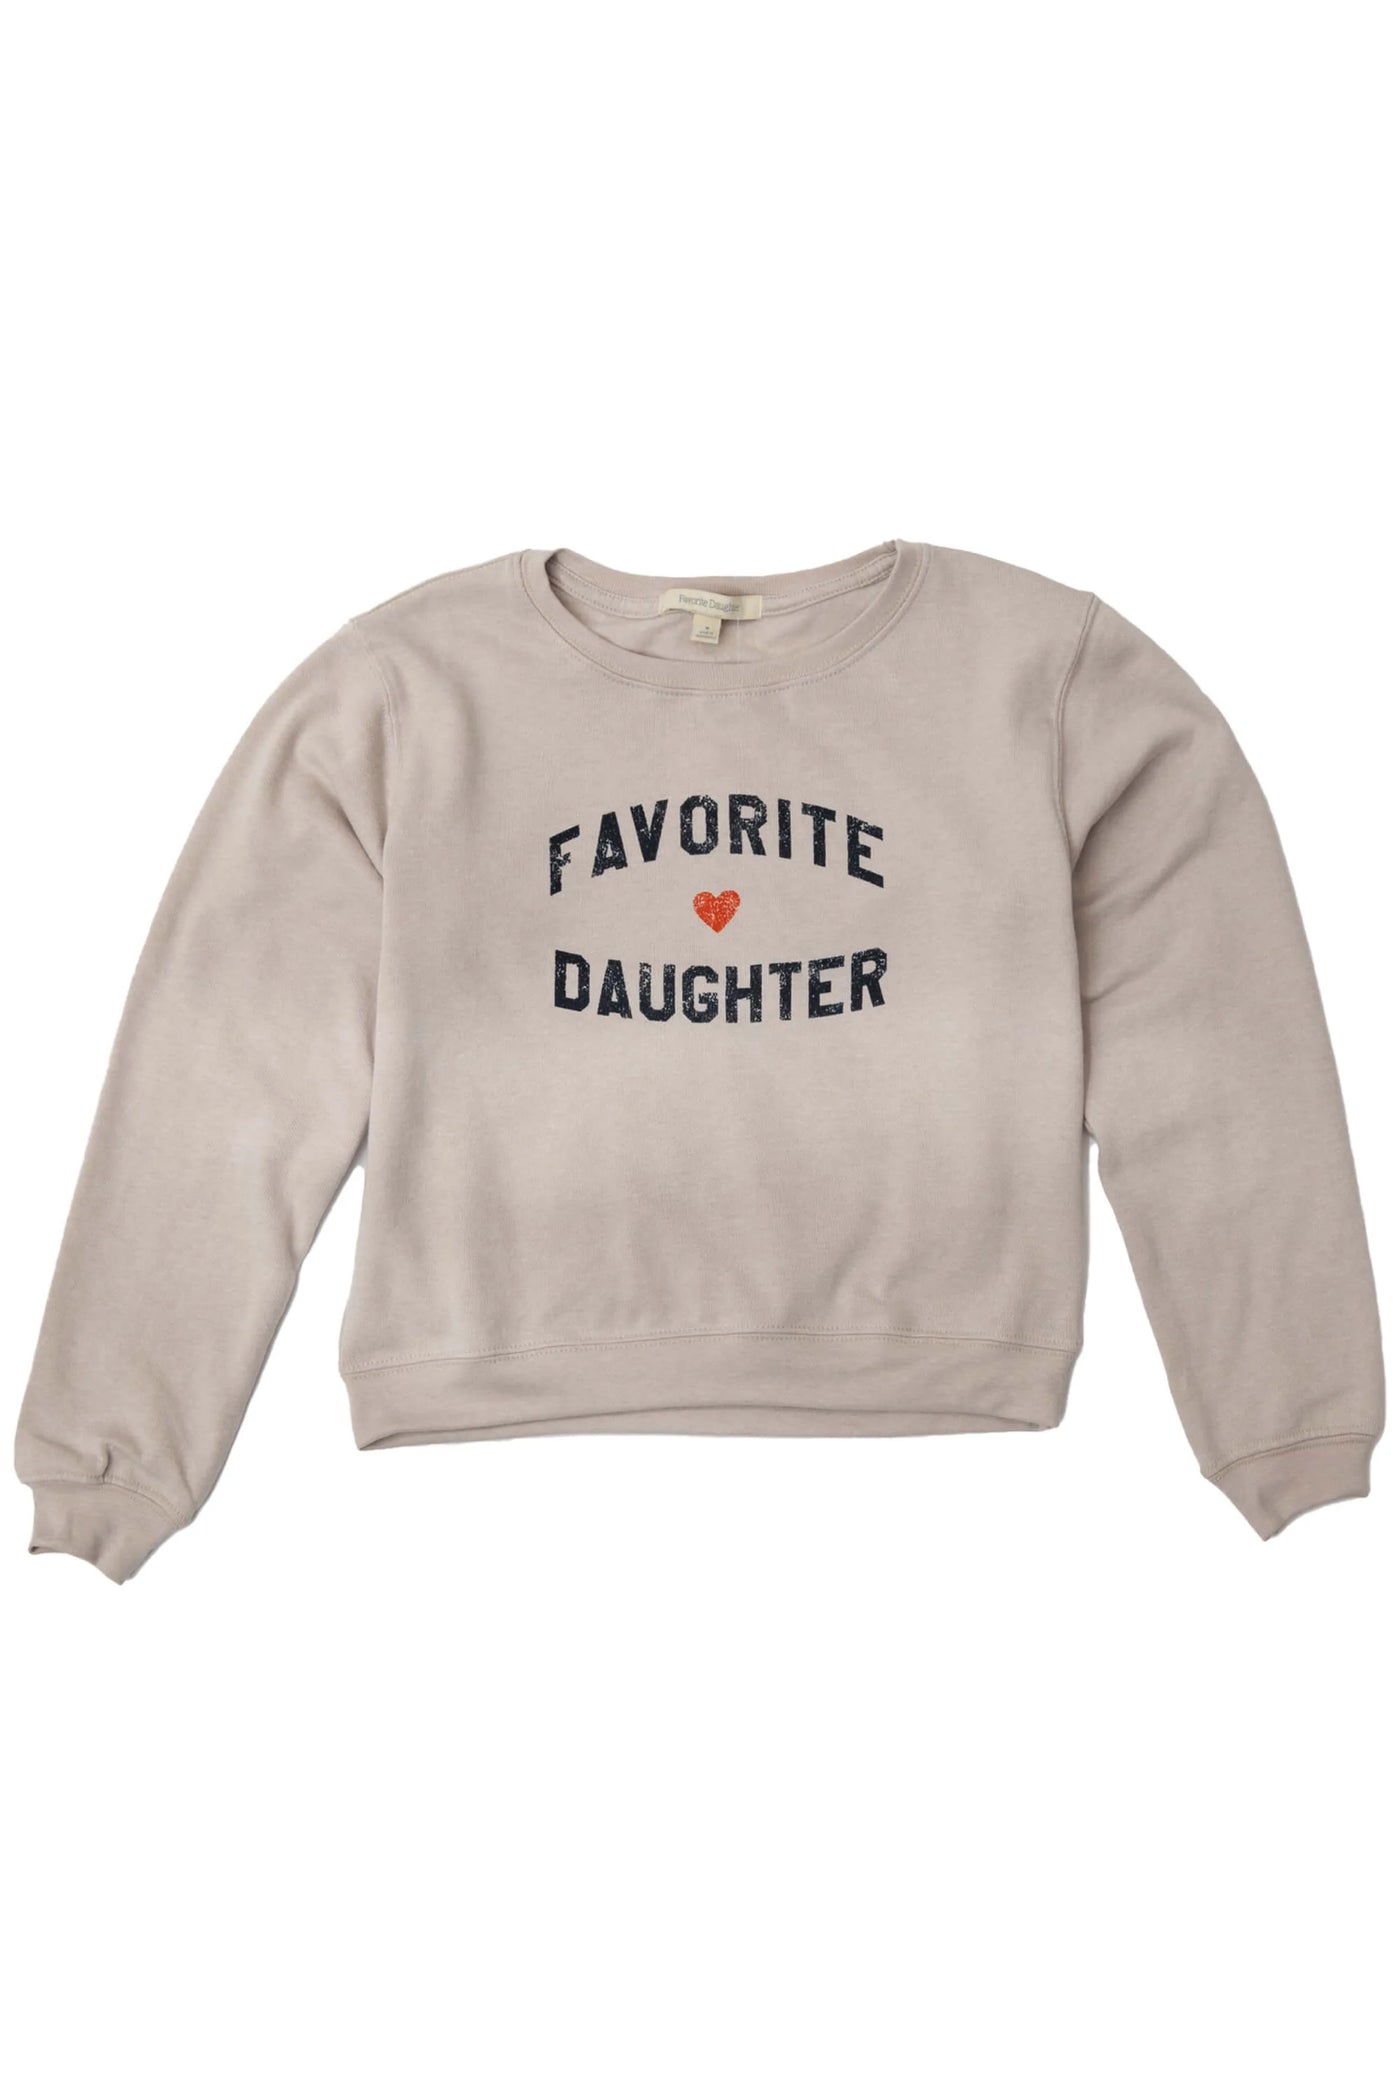 favorite daughter youth size selina sweatshirt